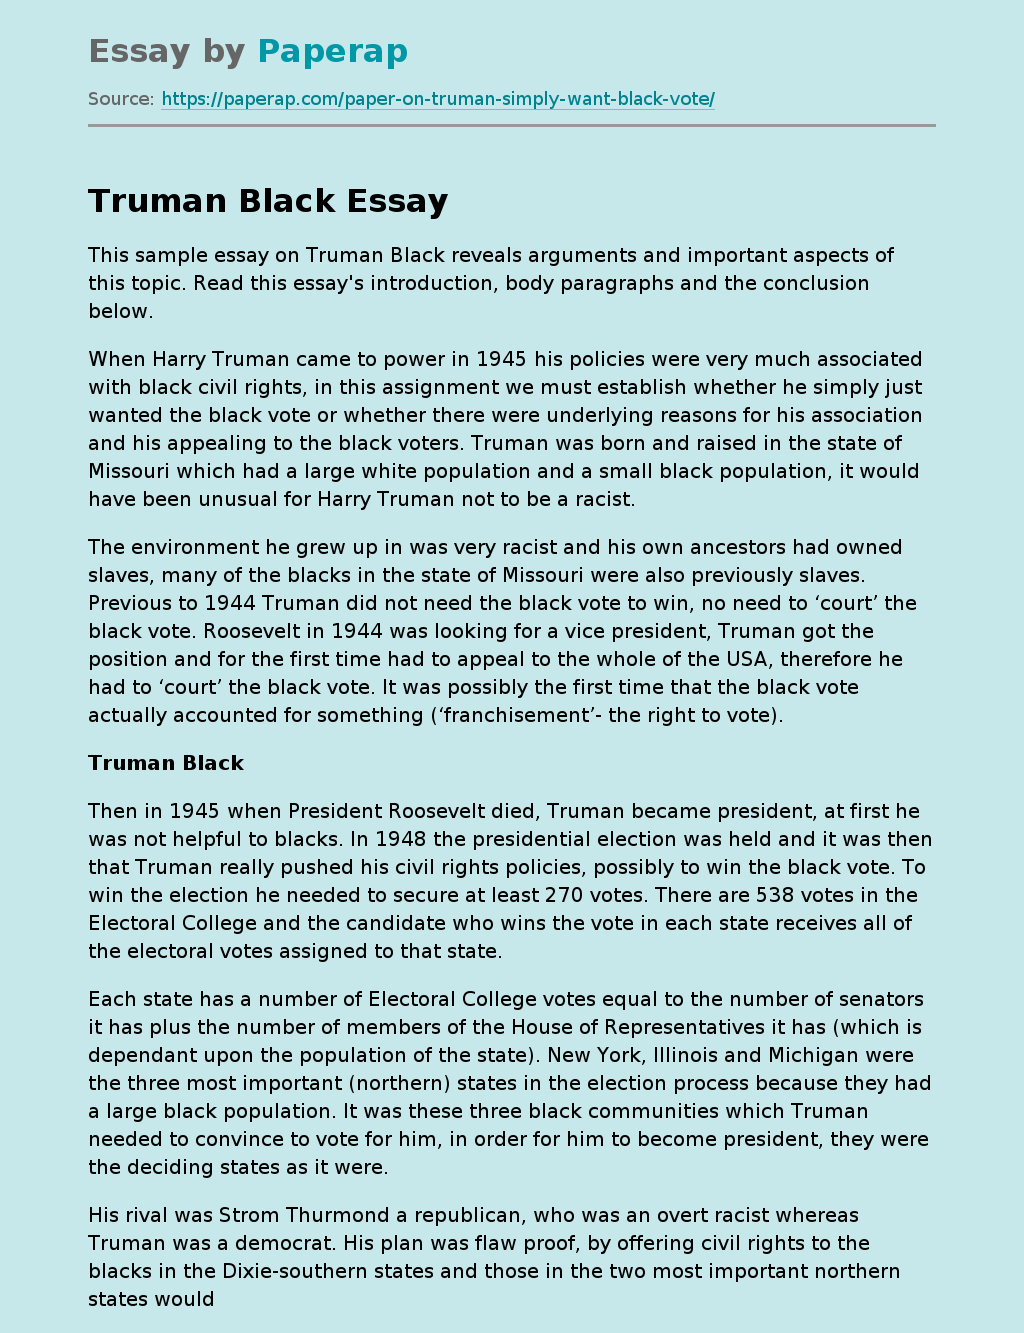 Truman Black: An Analysis